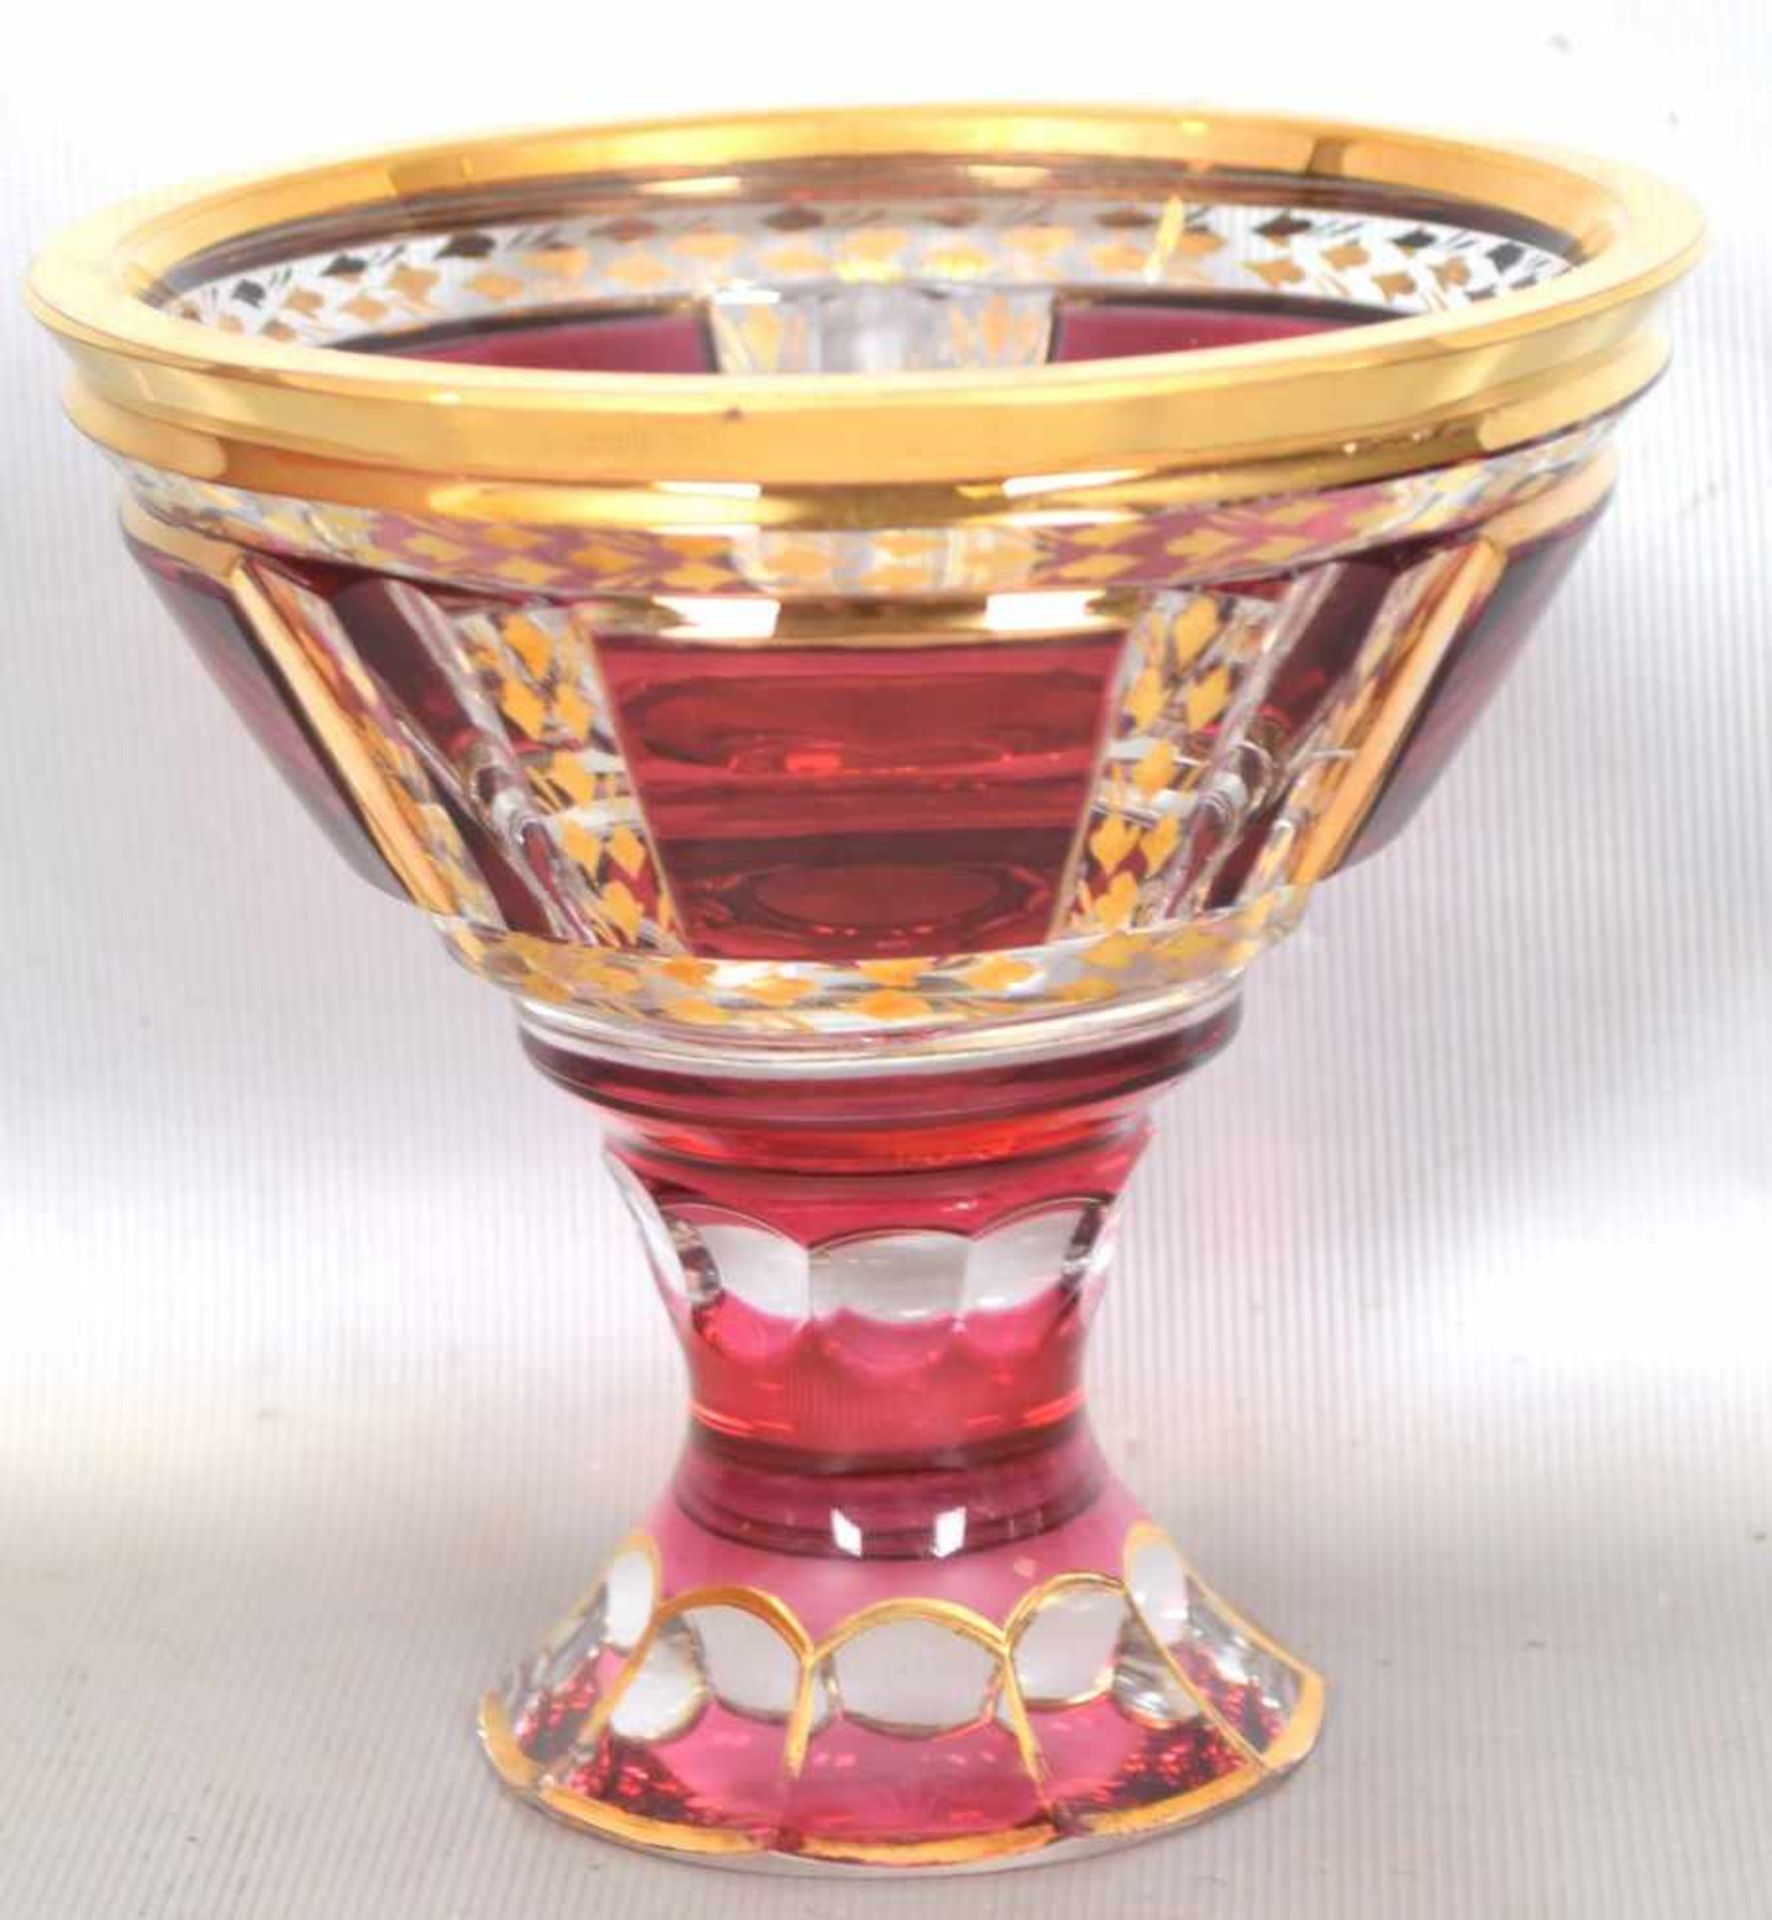 Aufsatzschalefarbl. Glas, geschliffen verziert, mit rotem Überfang, gold verziert, H 11 cm, Dm 11